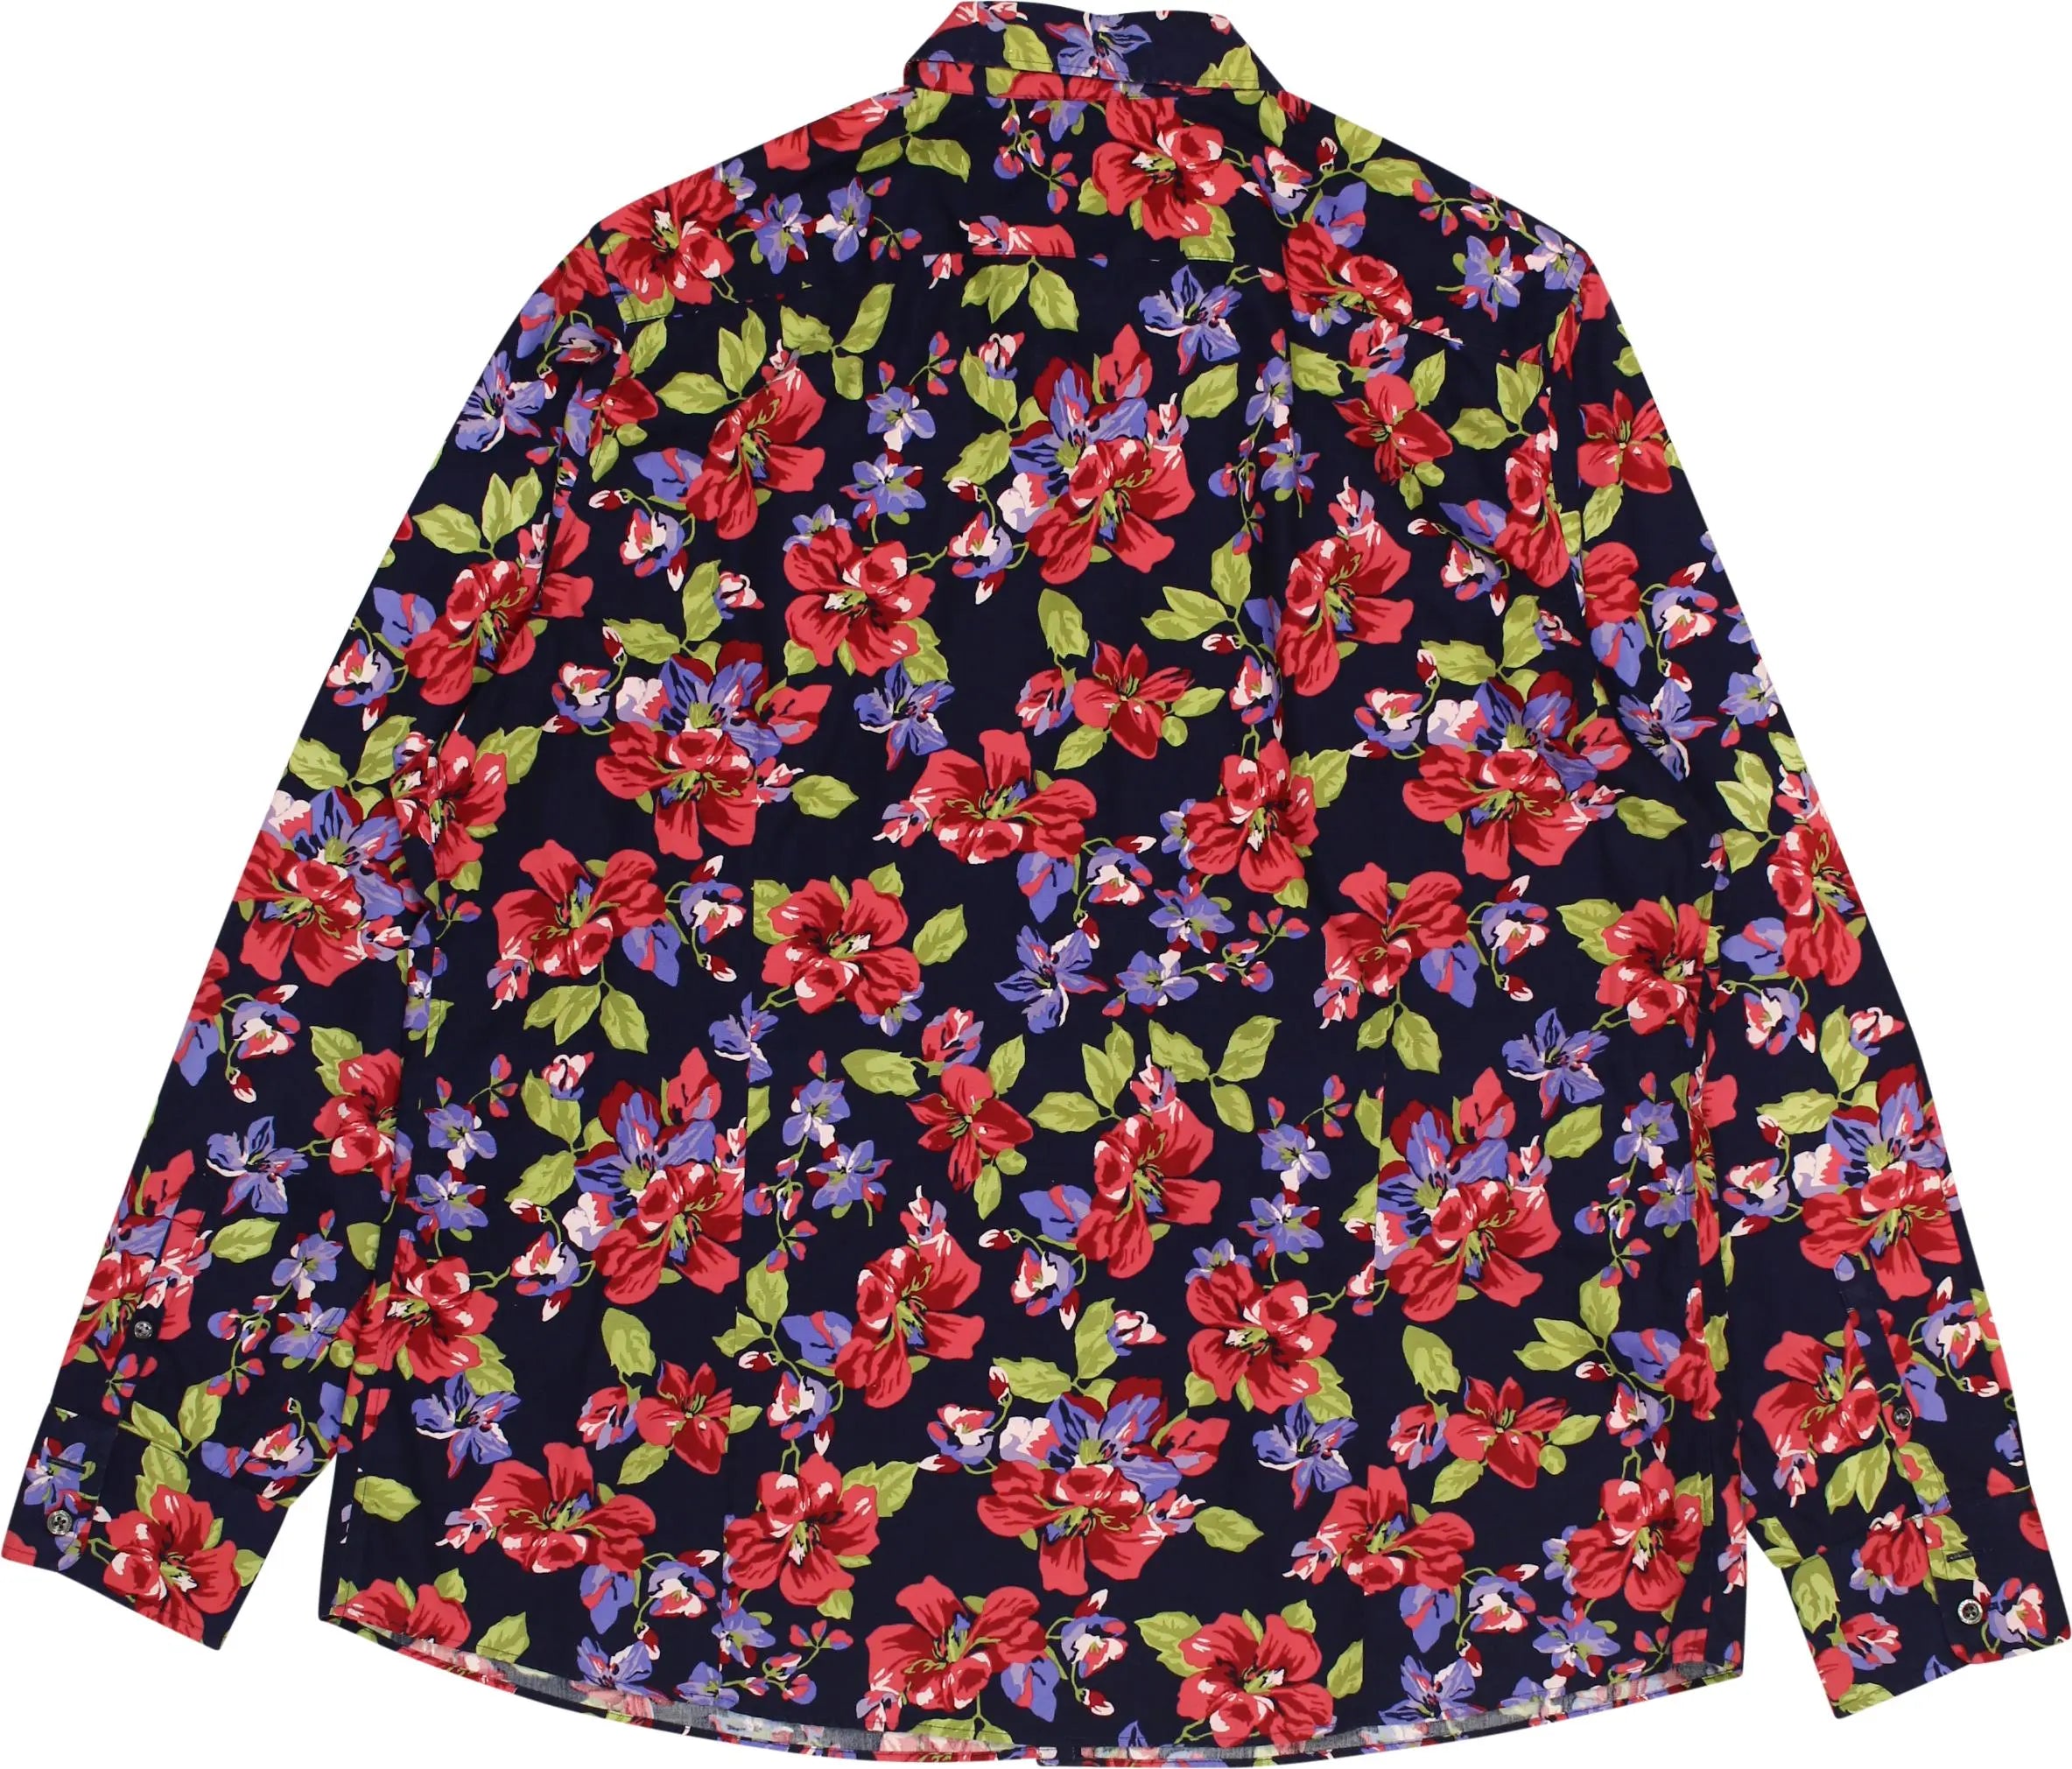 Lands' End - Flower Shirt- ThriftTale.com - Vintage and second handclothing